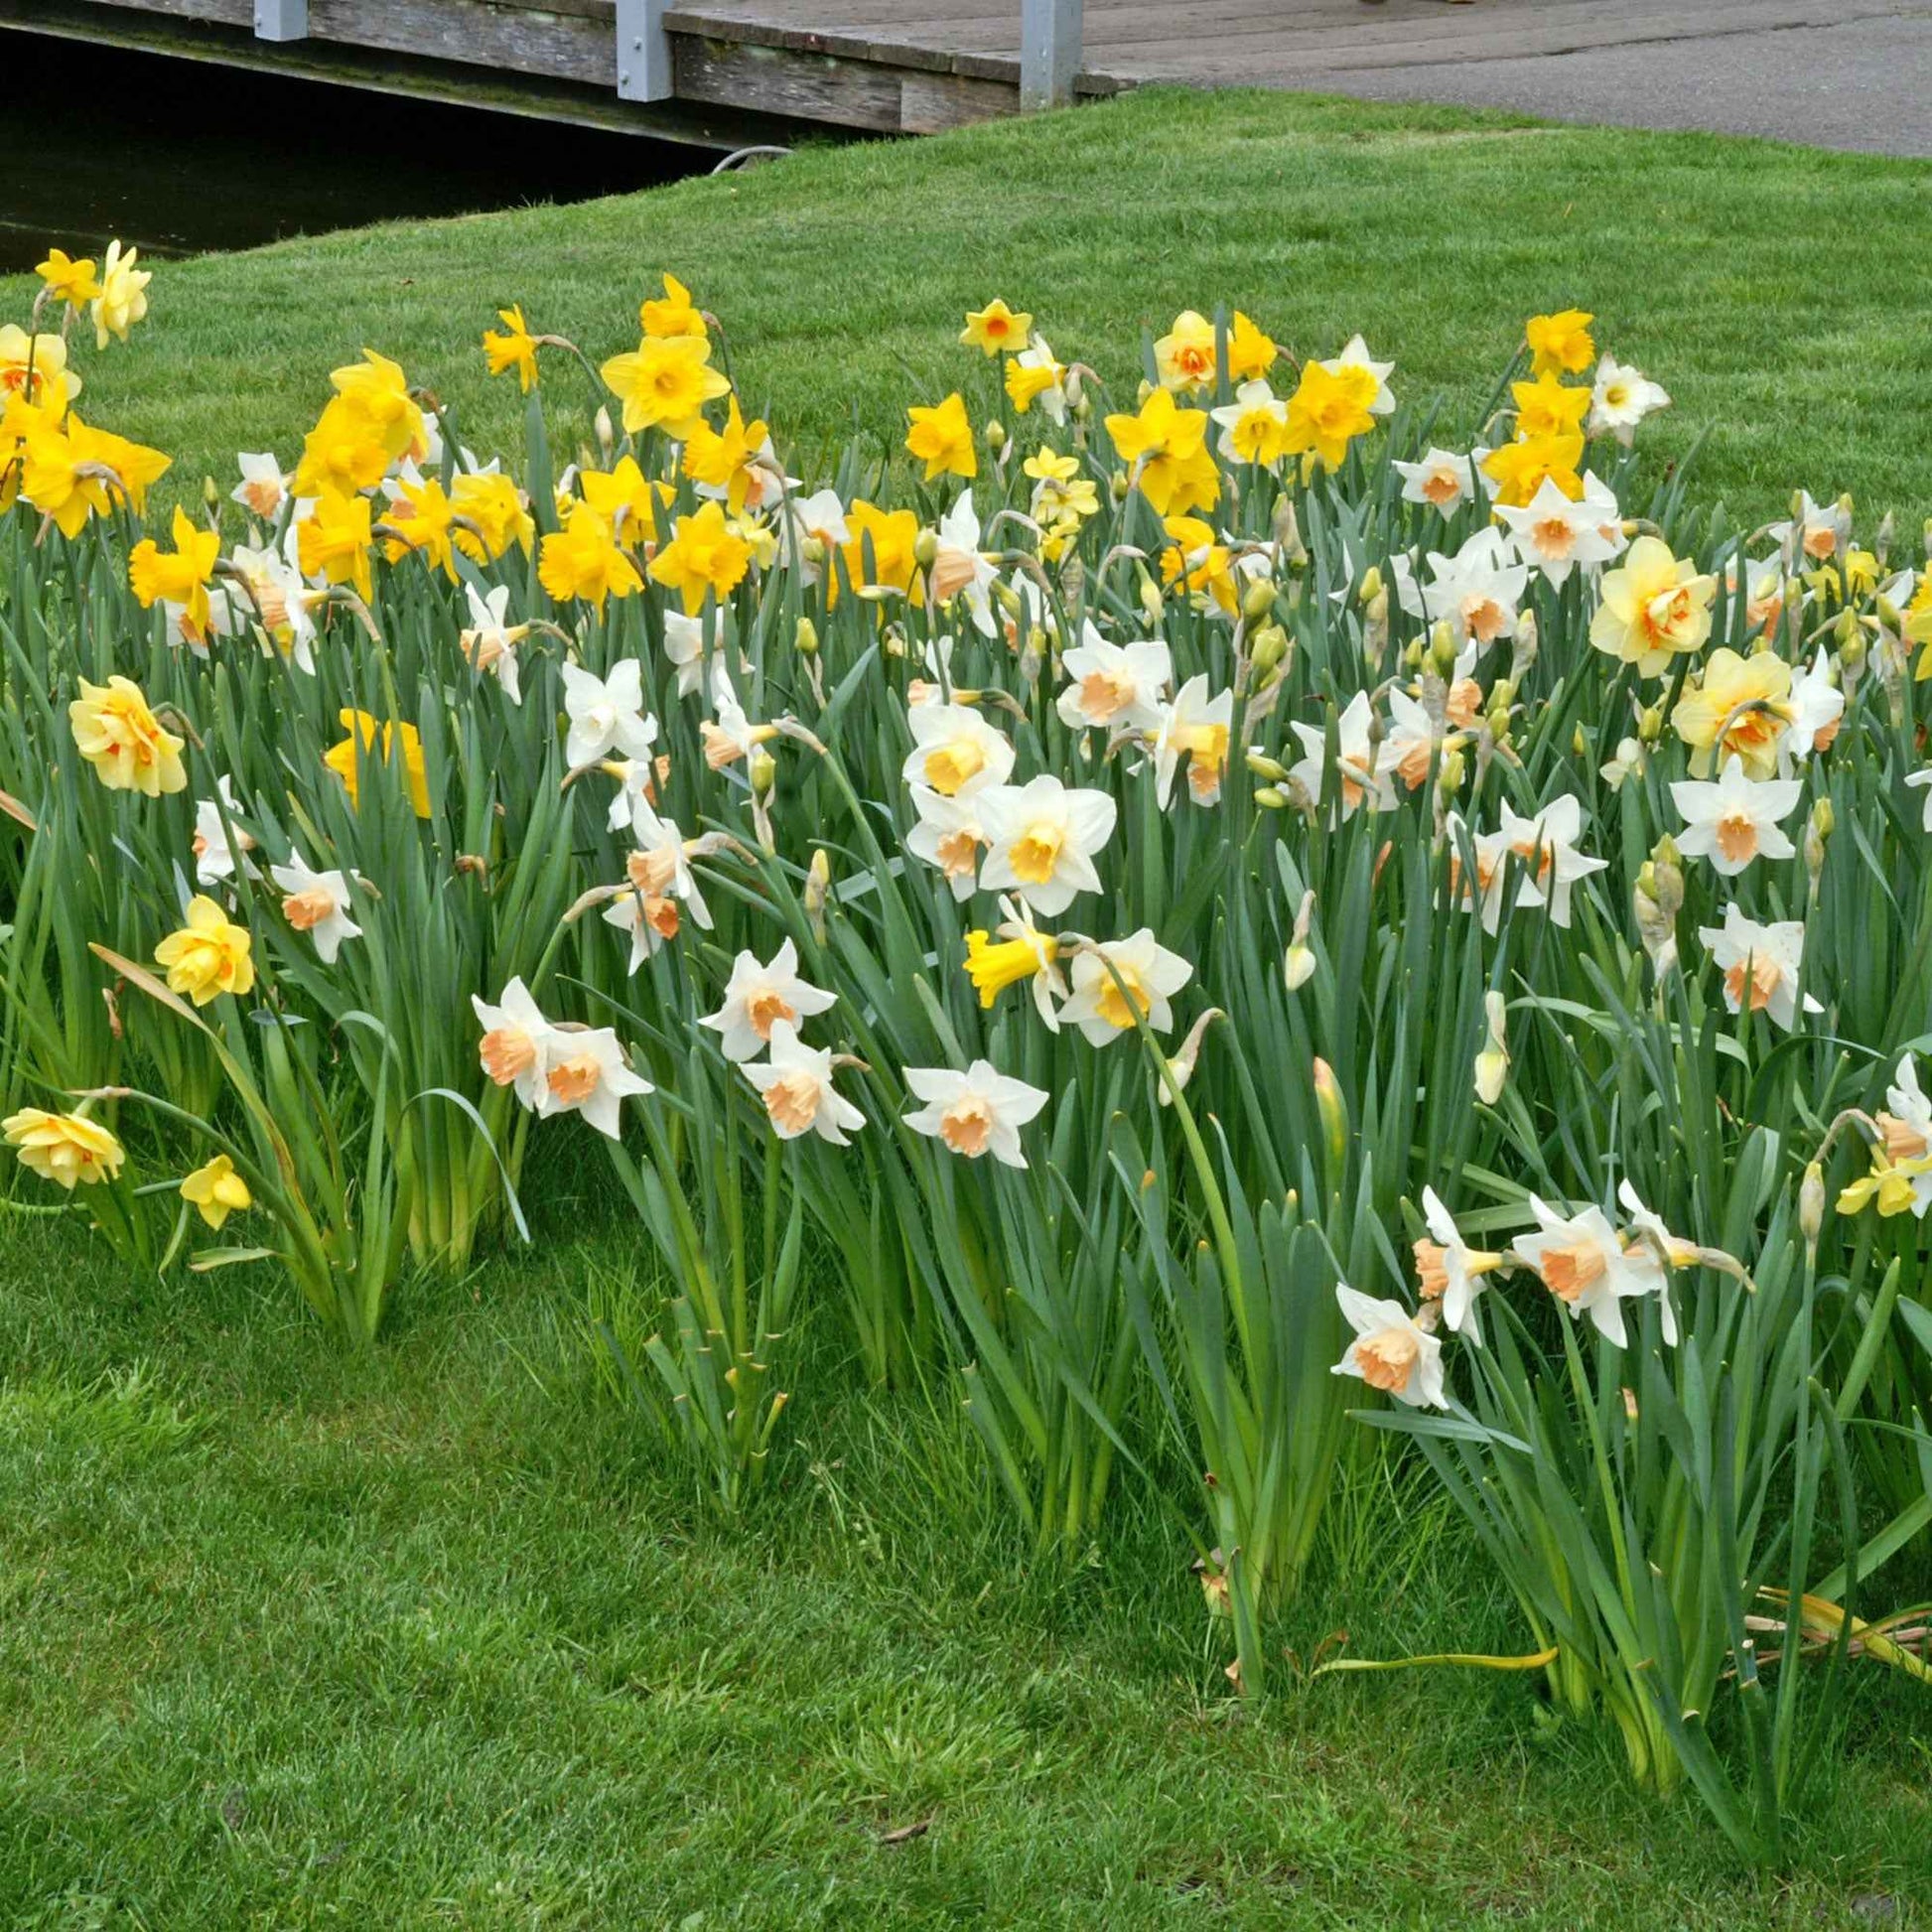 25x Narcissen Narcissus - Mix 'Dwarf' biologisch geel-wit - Alle populaire bloembollen